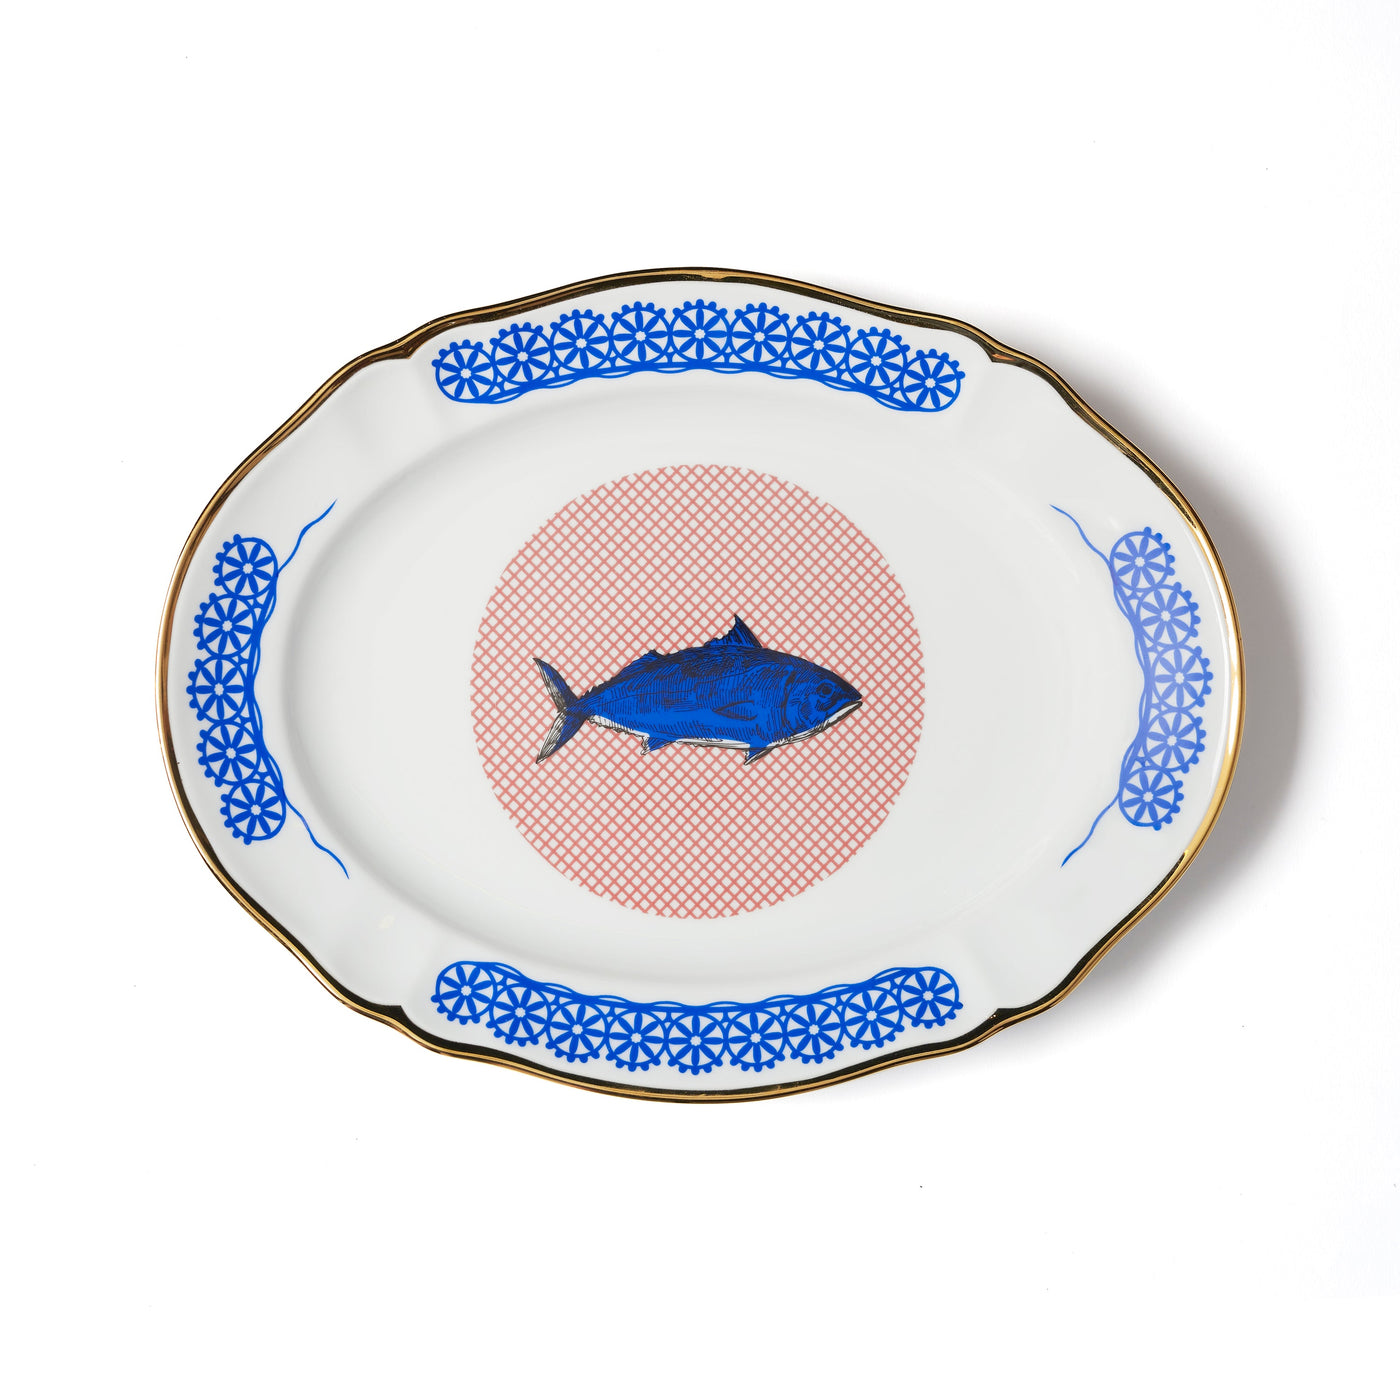 Fish Oval Platter